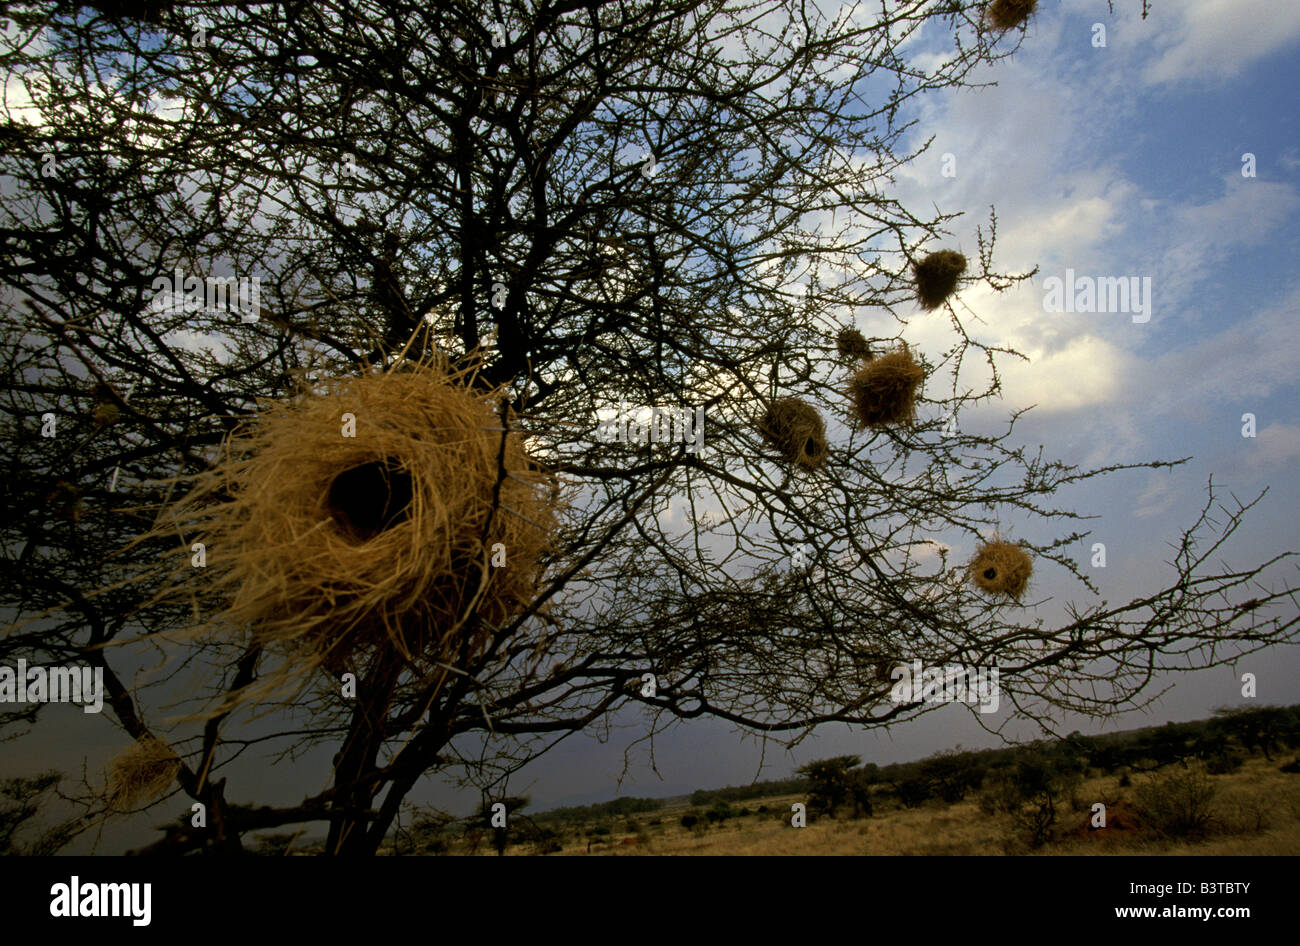 Africa, Tanzania. A weaver's nest in an Acacia Tree. Stock Photo